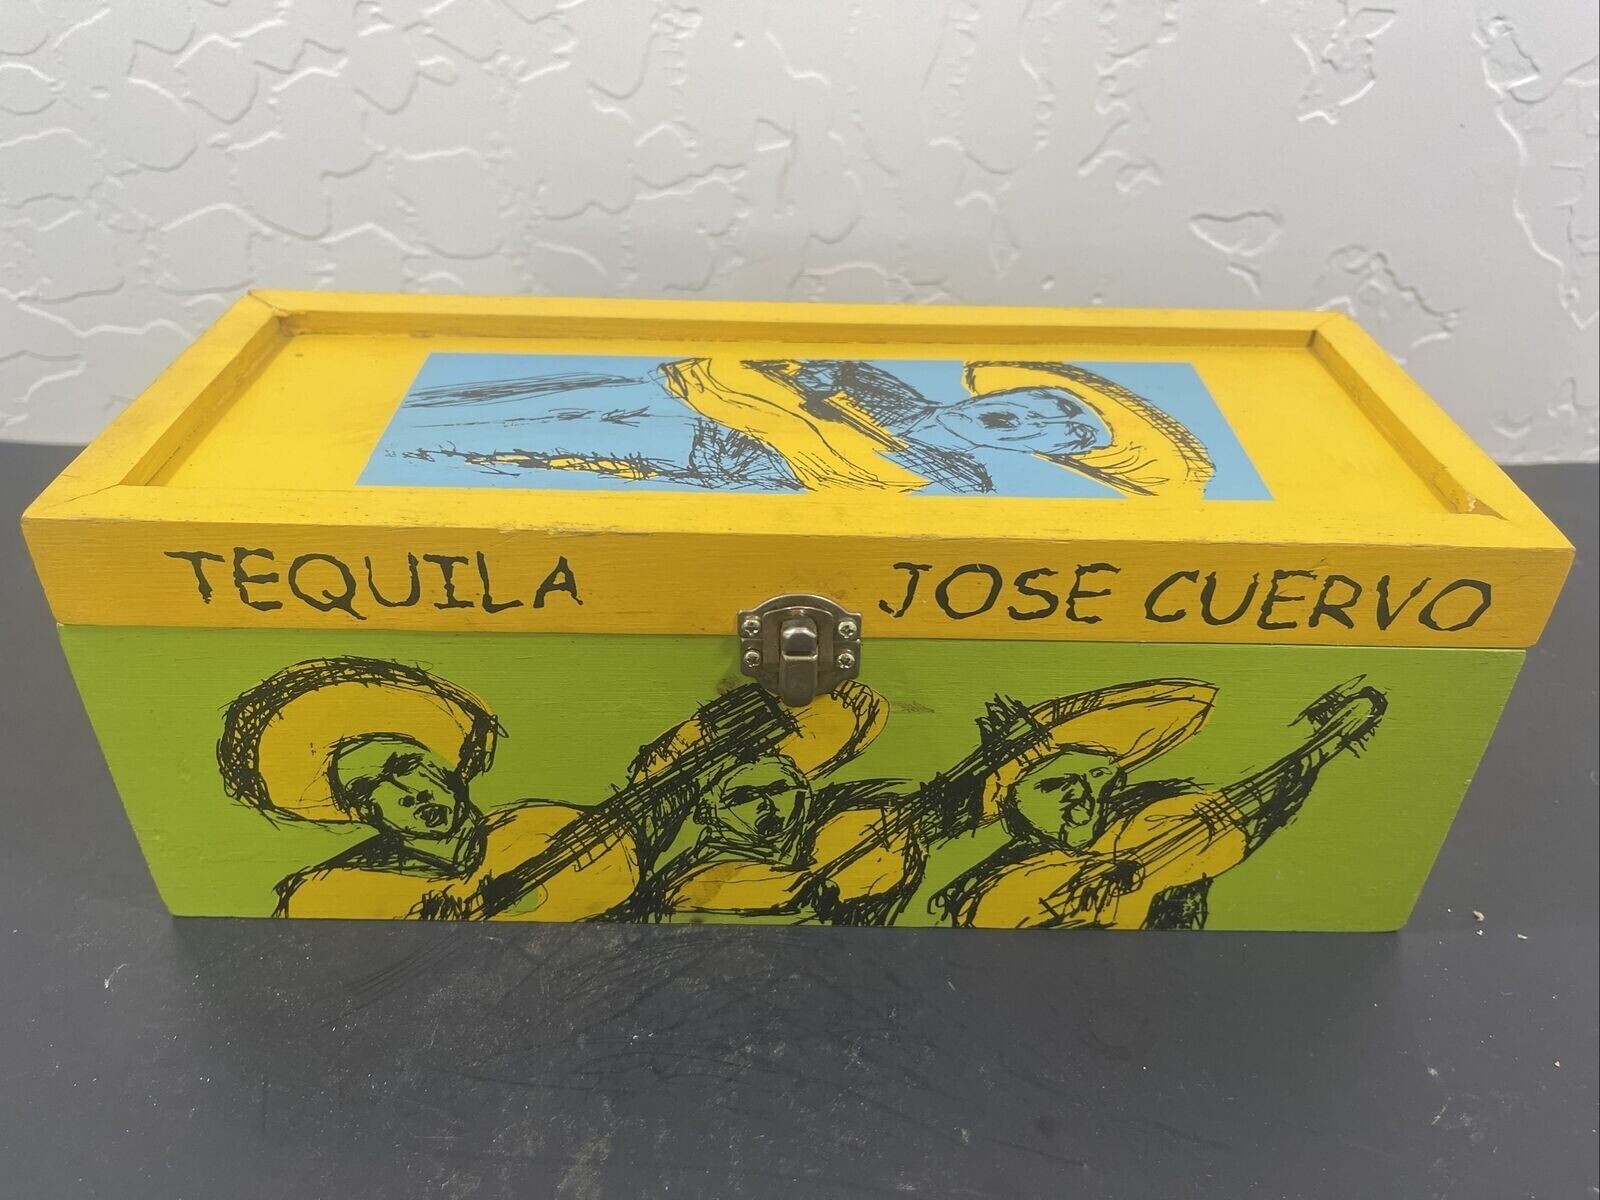 2001 JOSE CUERVO empty wooden tequila box - Q7 -